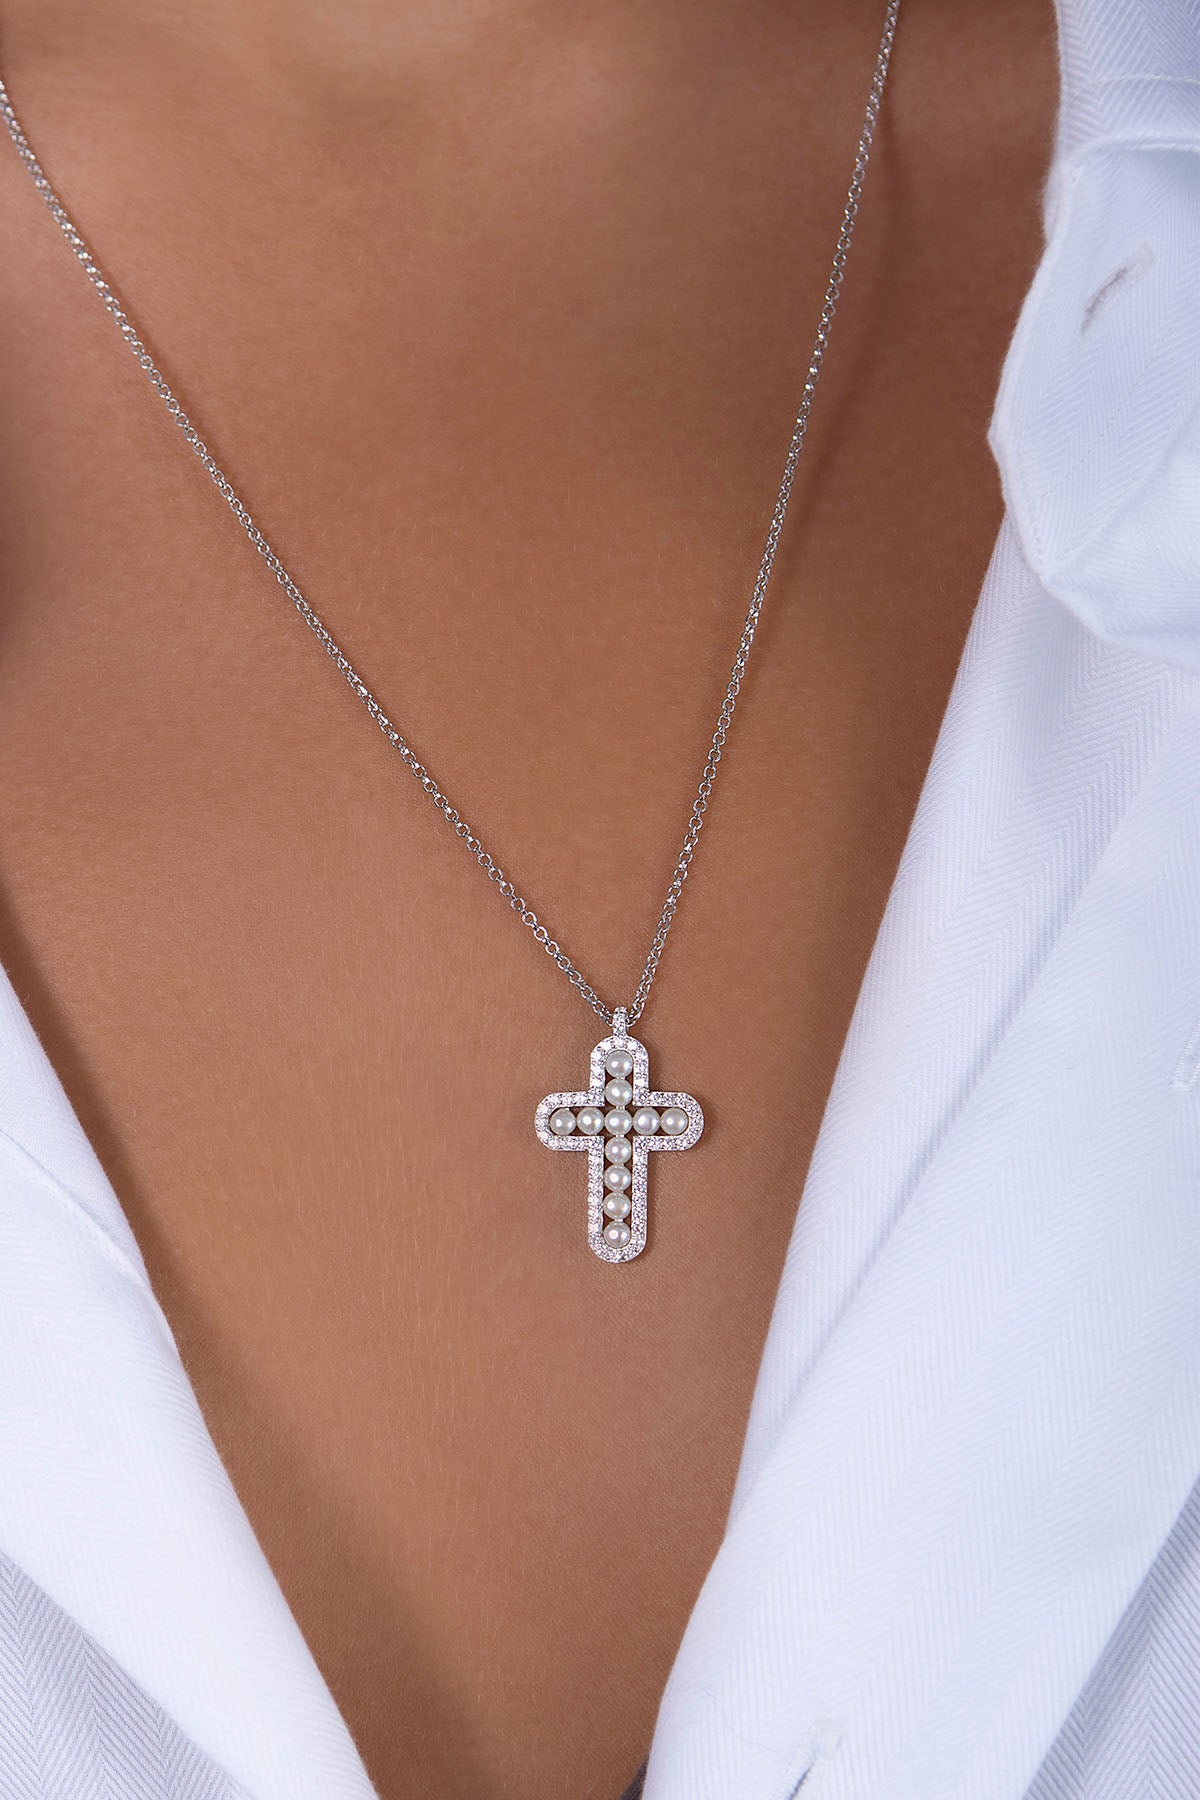 APM Monaco Cross Adjustable Necklace with Pearls in Silver